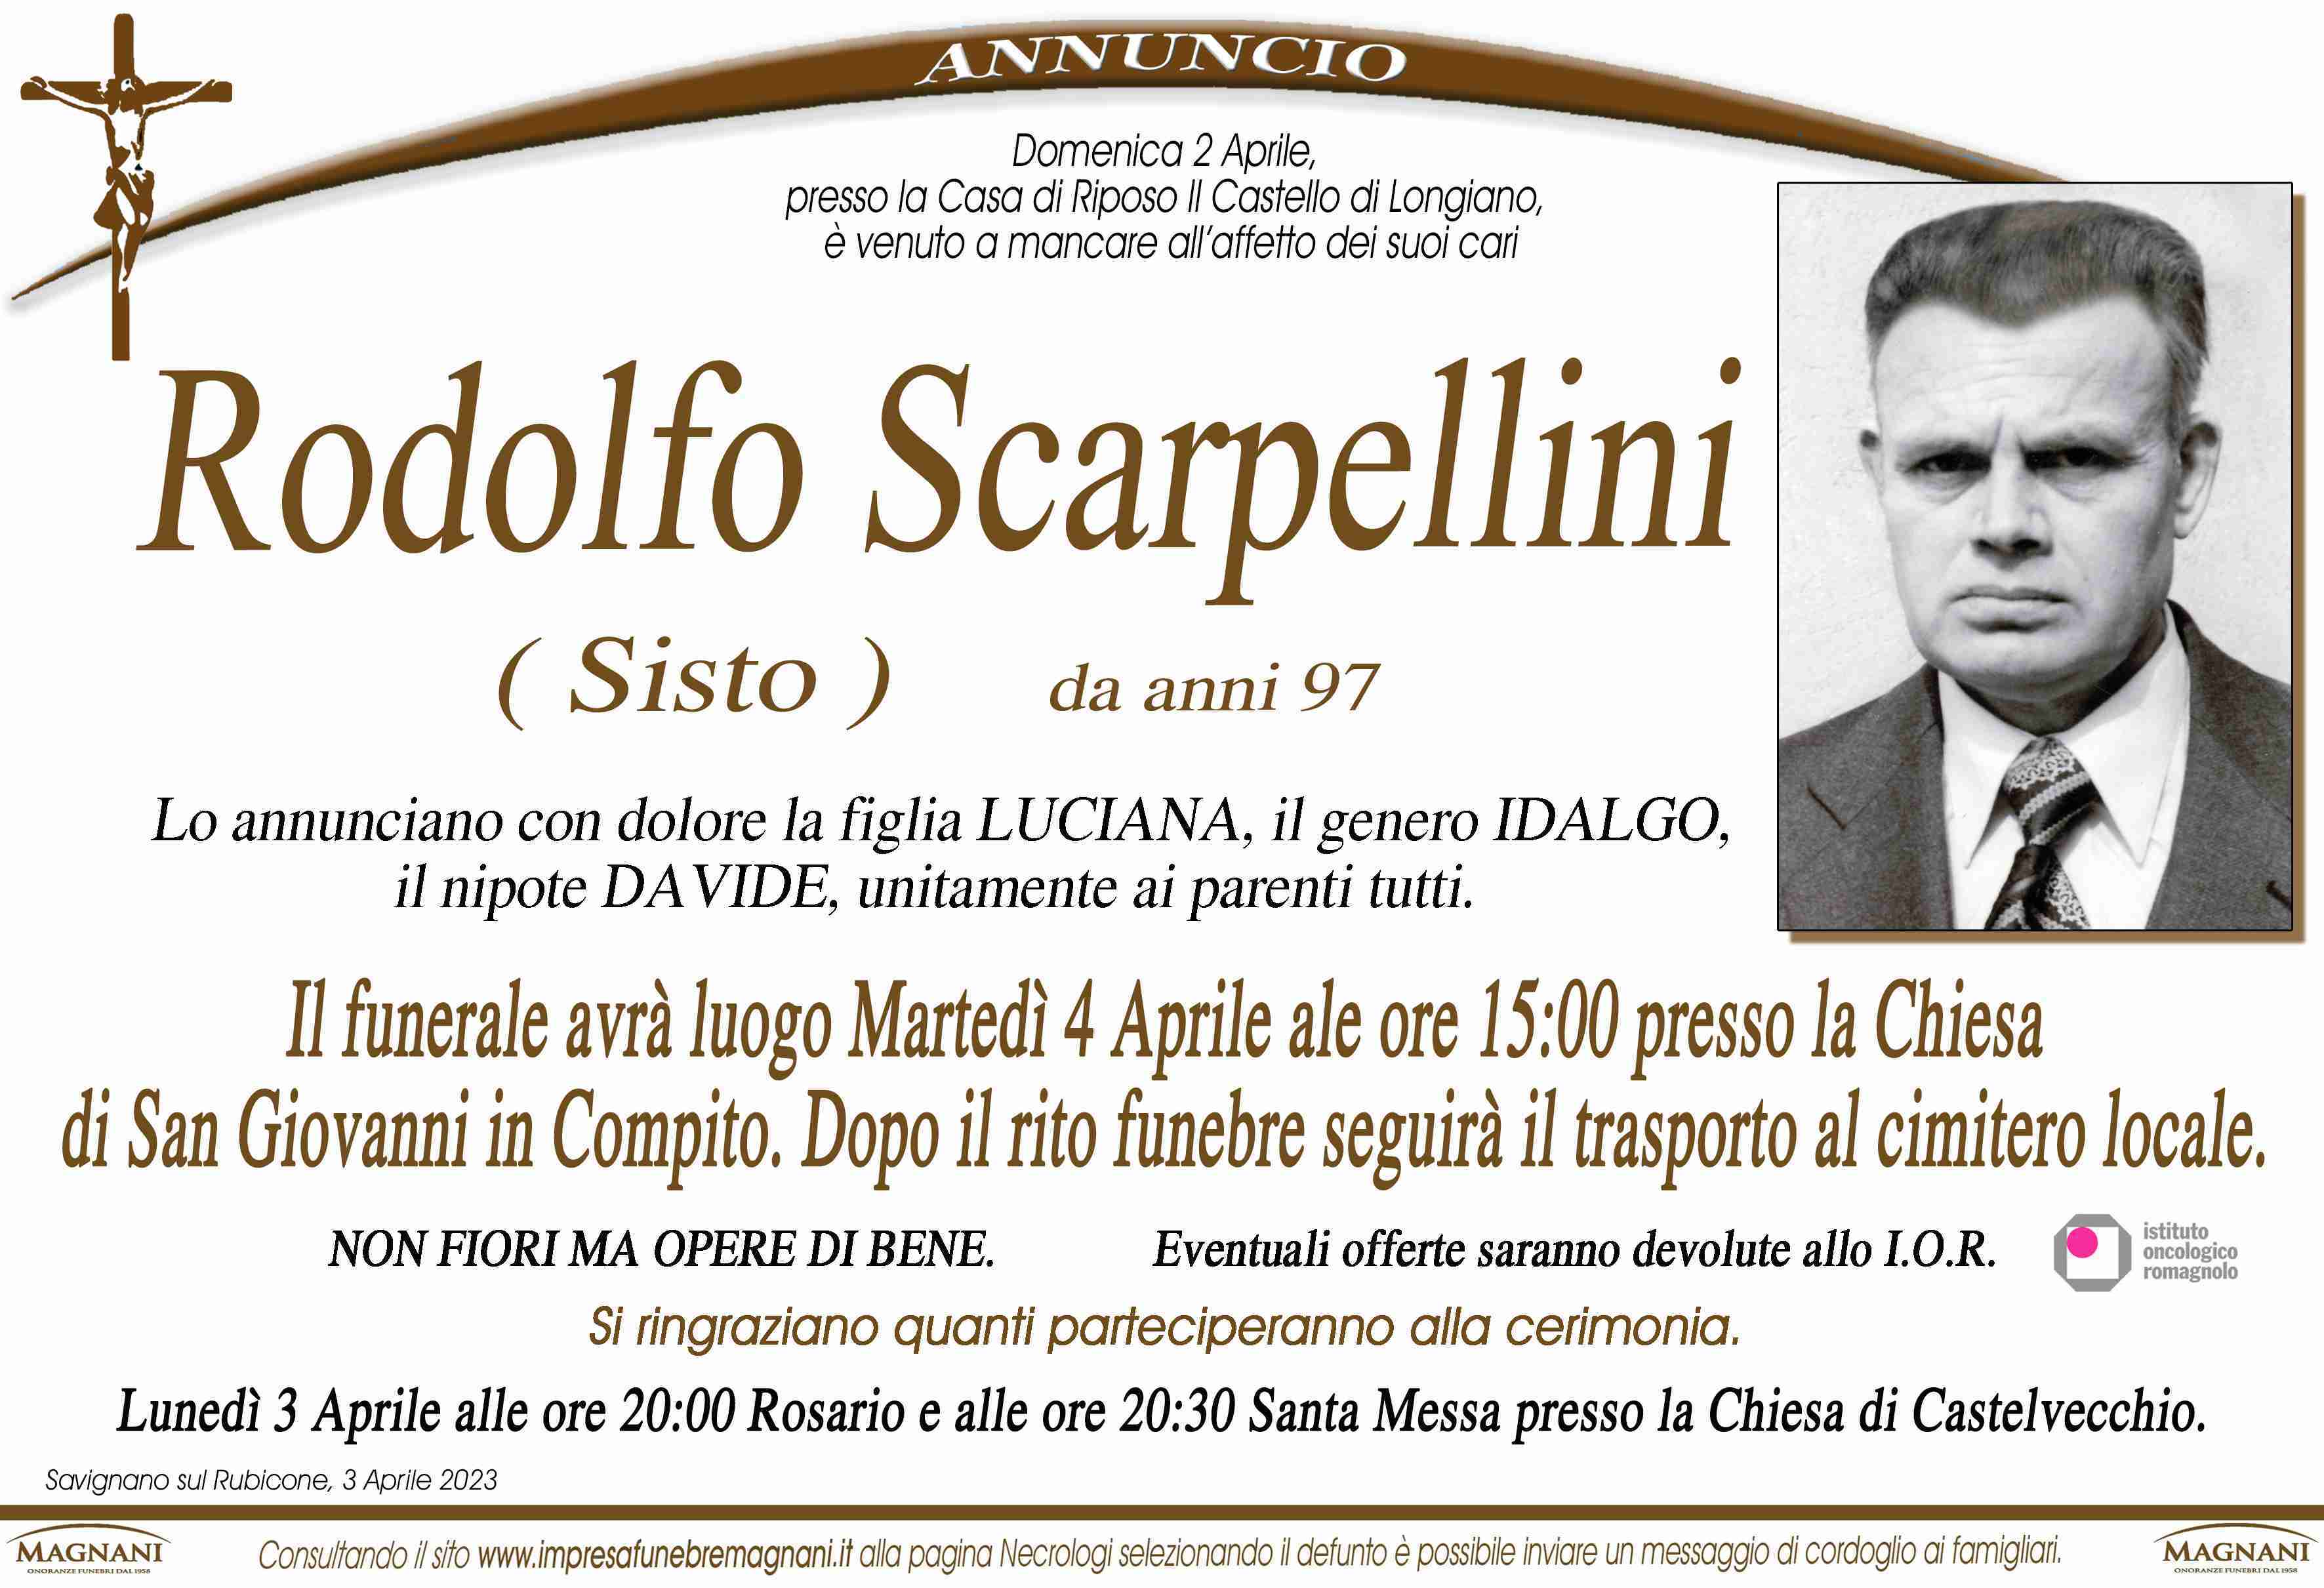 Rodolfo Scarpellini